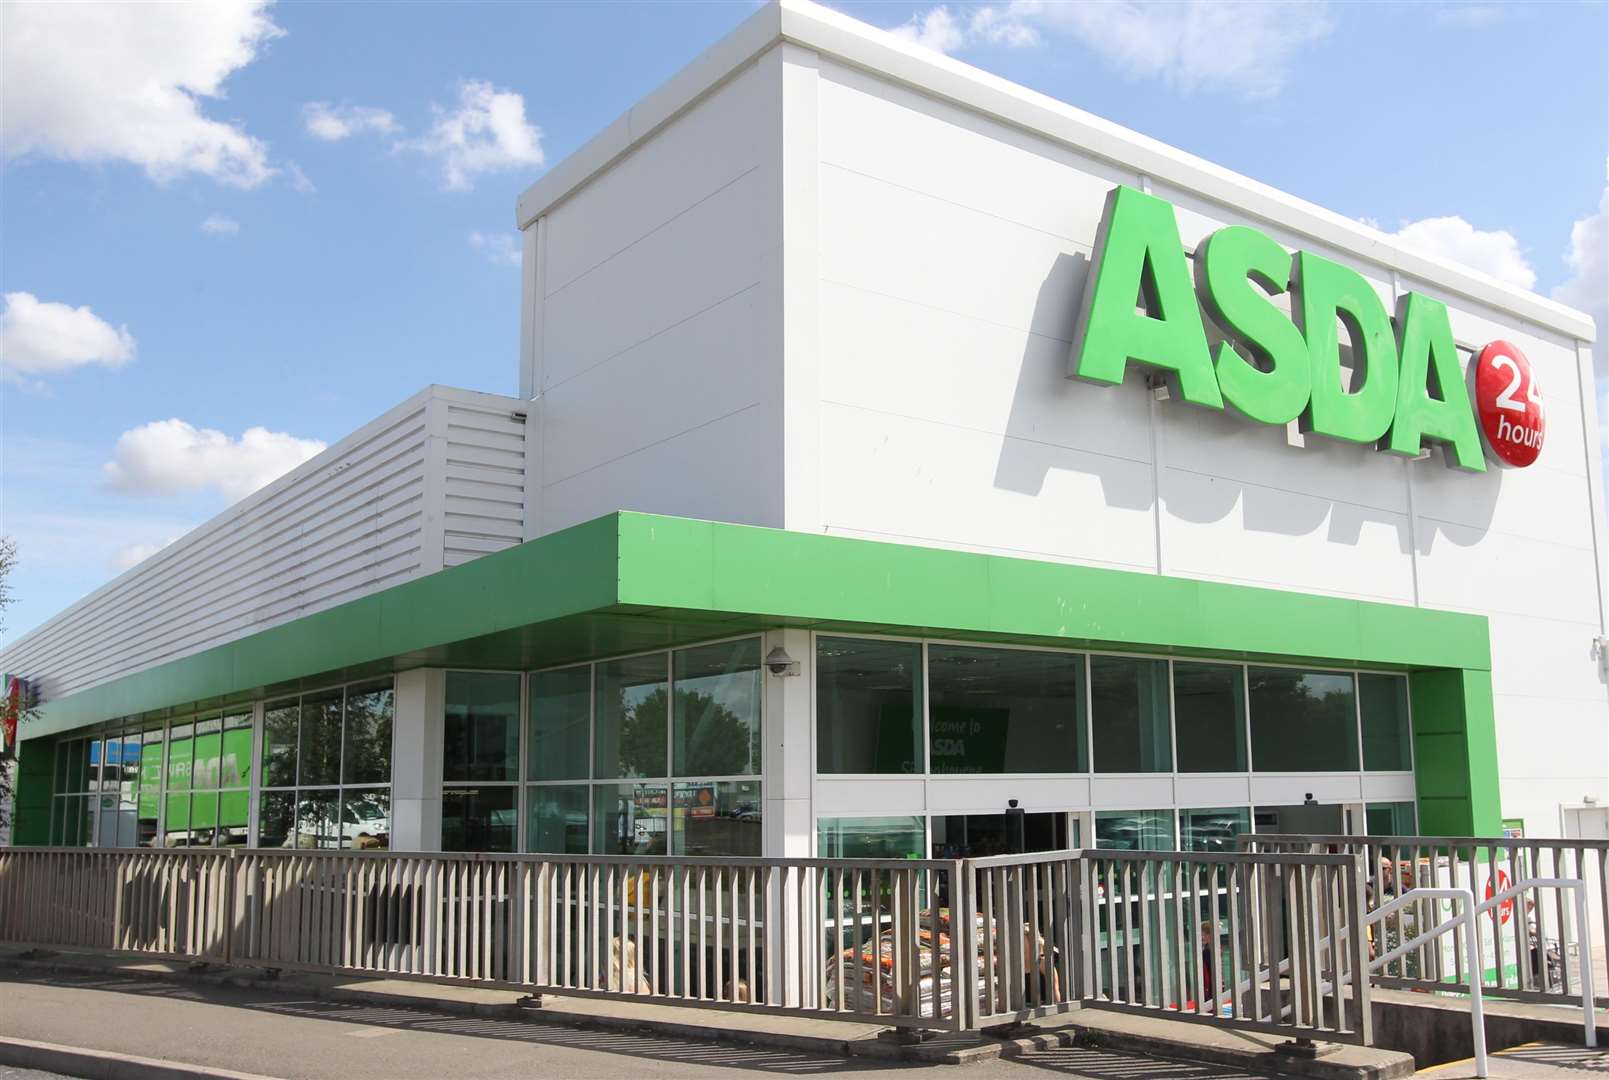 The Asda store in Mill Way, Sittingbourne